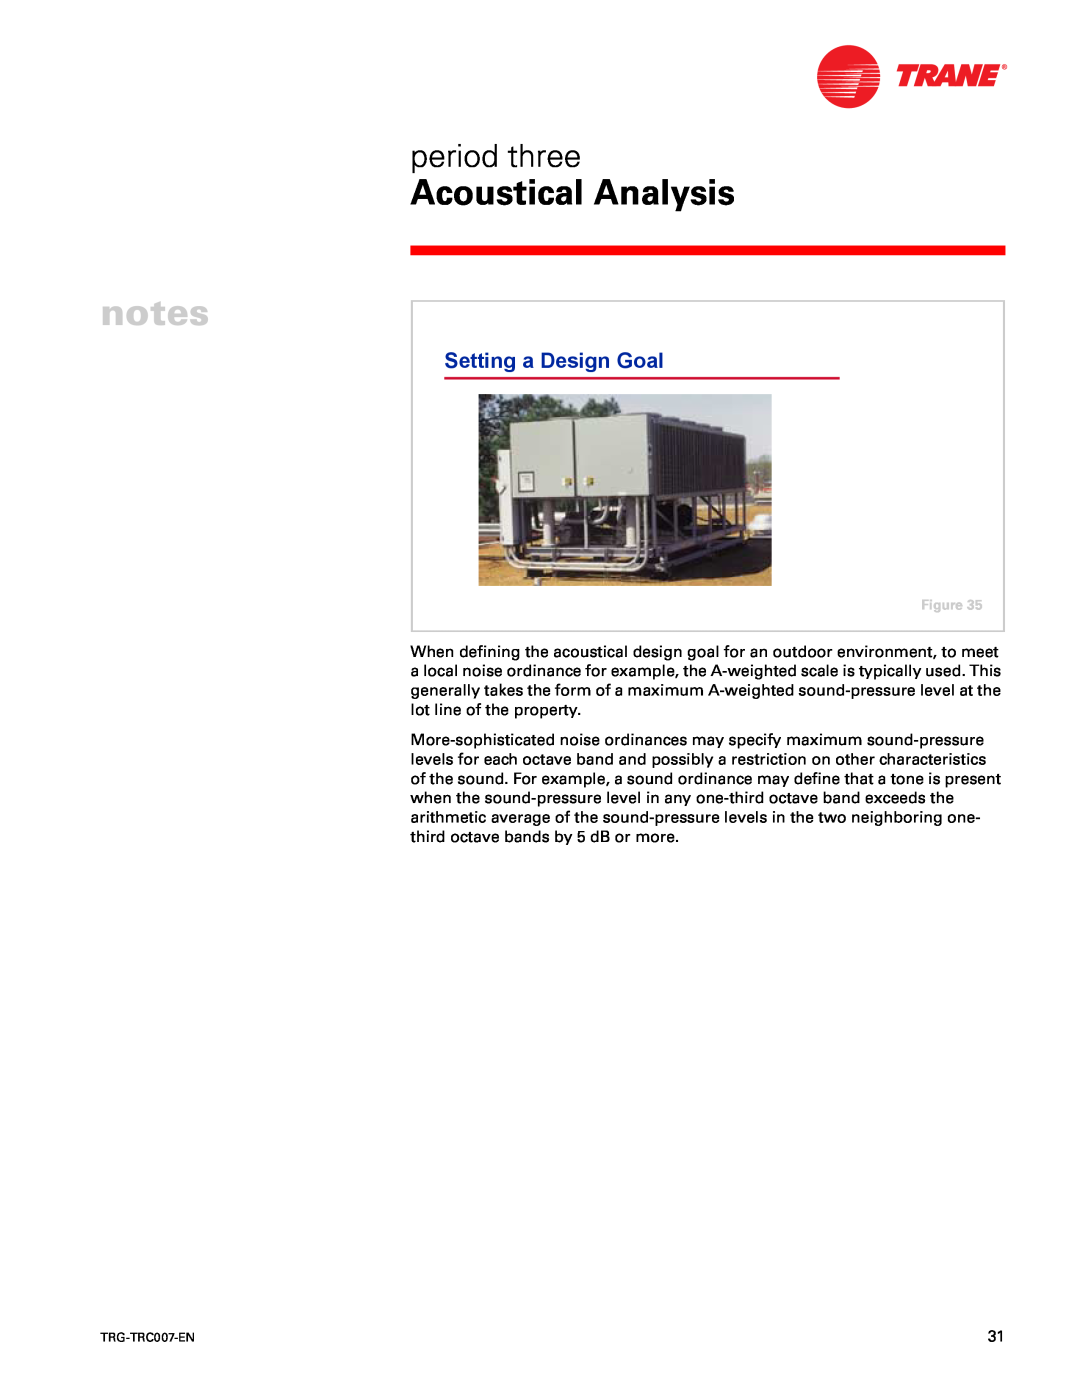 Trane TRG-TRC007-EN manual Acoustical Analysis, period three, Setting a Design Goal 